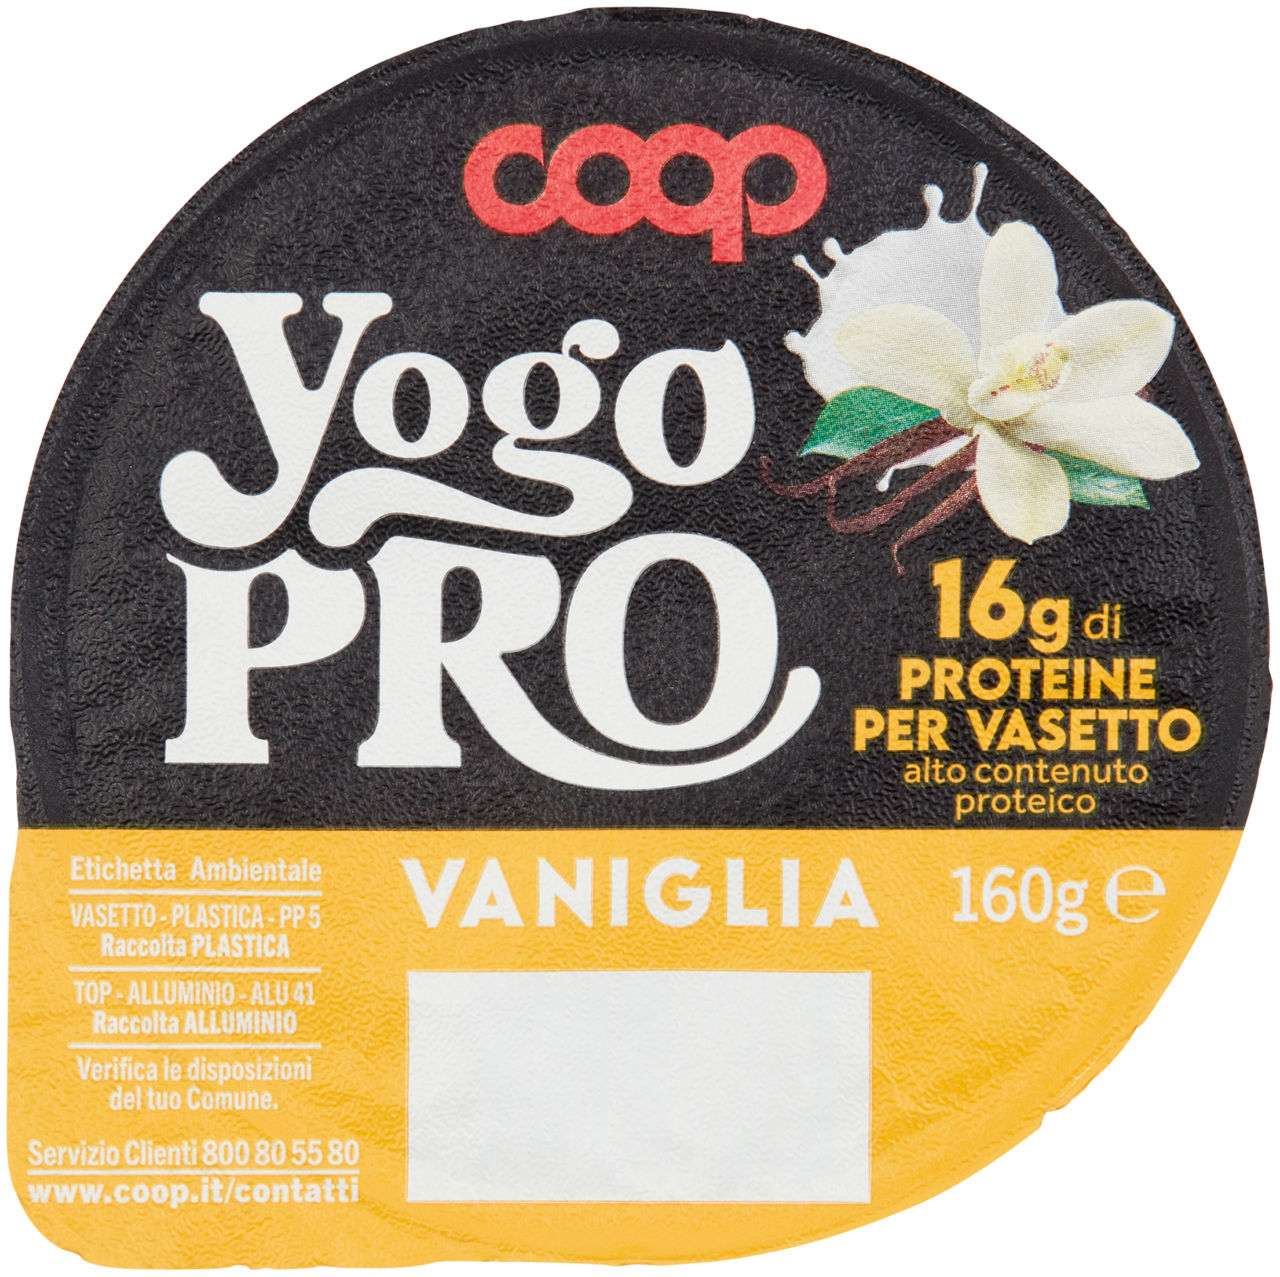 Yogurt proteico yogo pro al cucchiaio vaniglia coop g 160